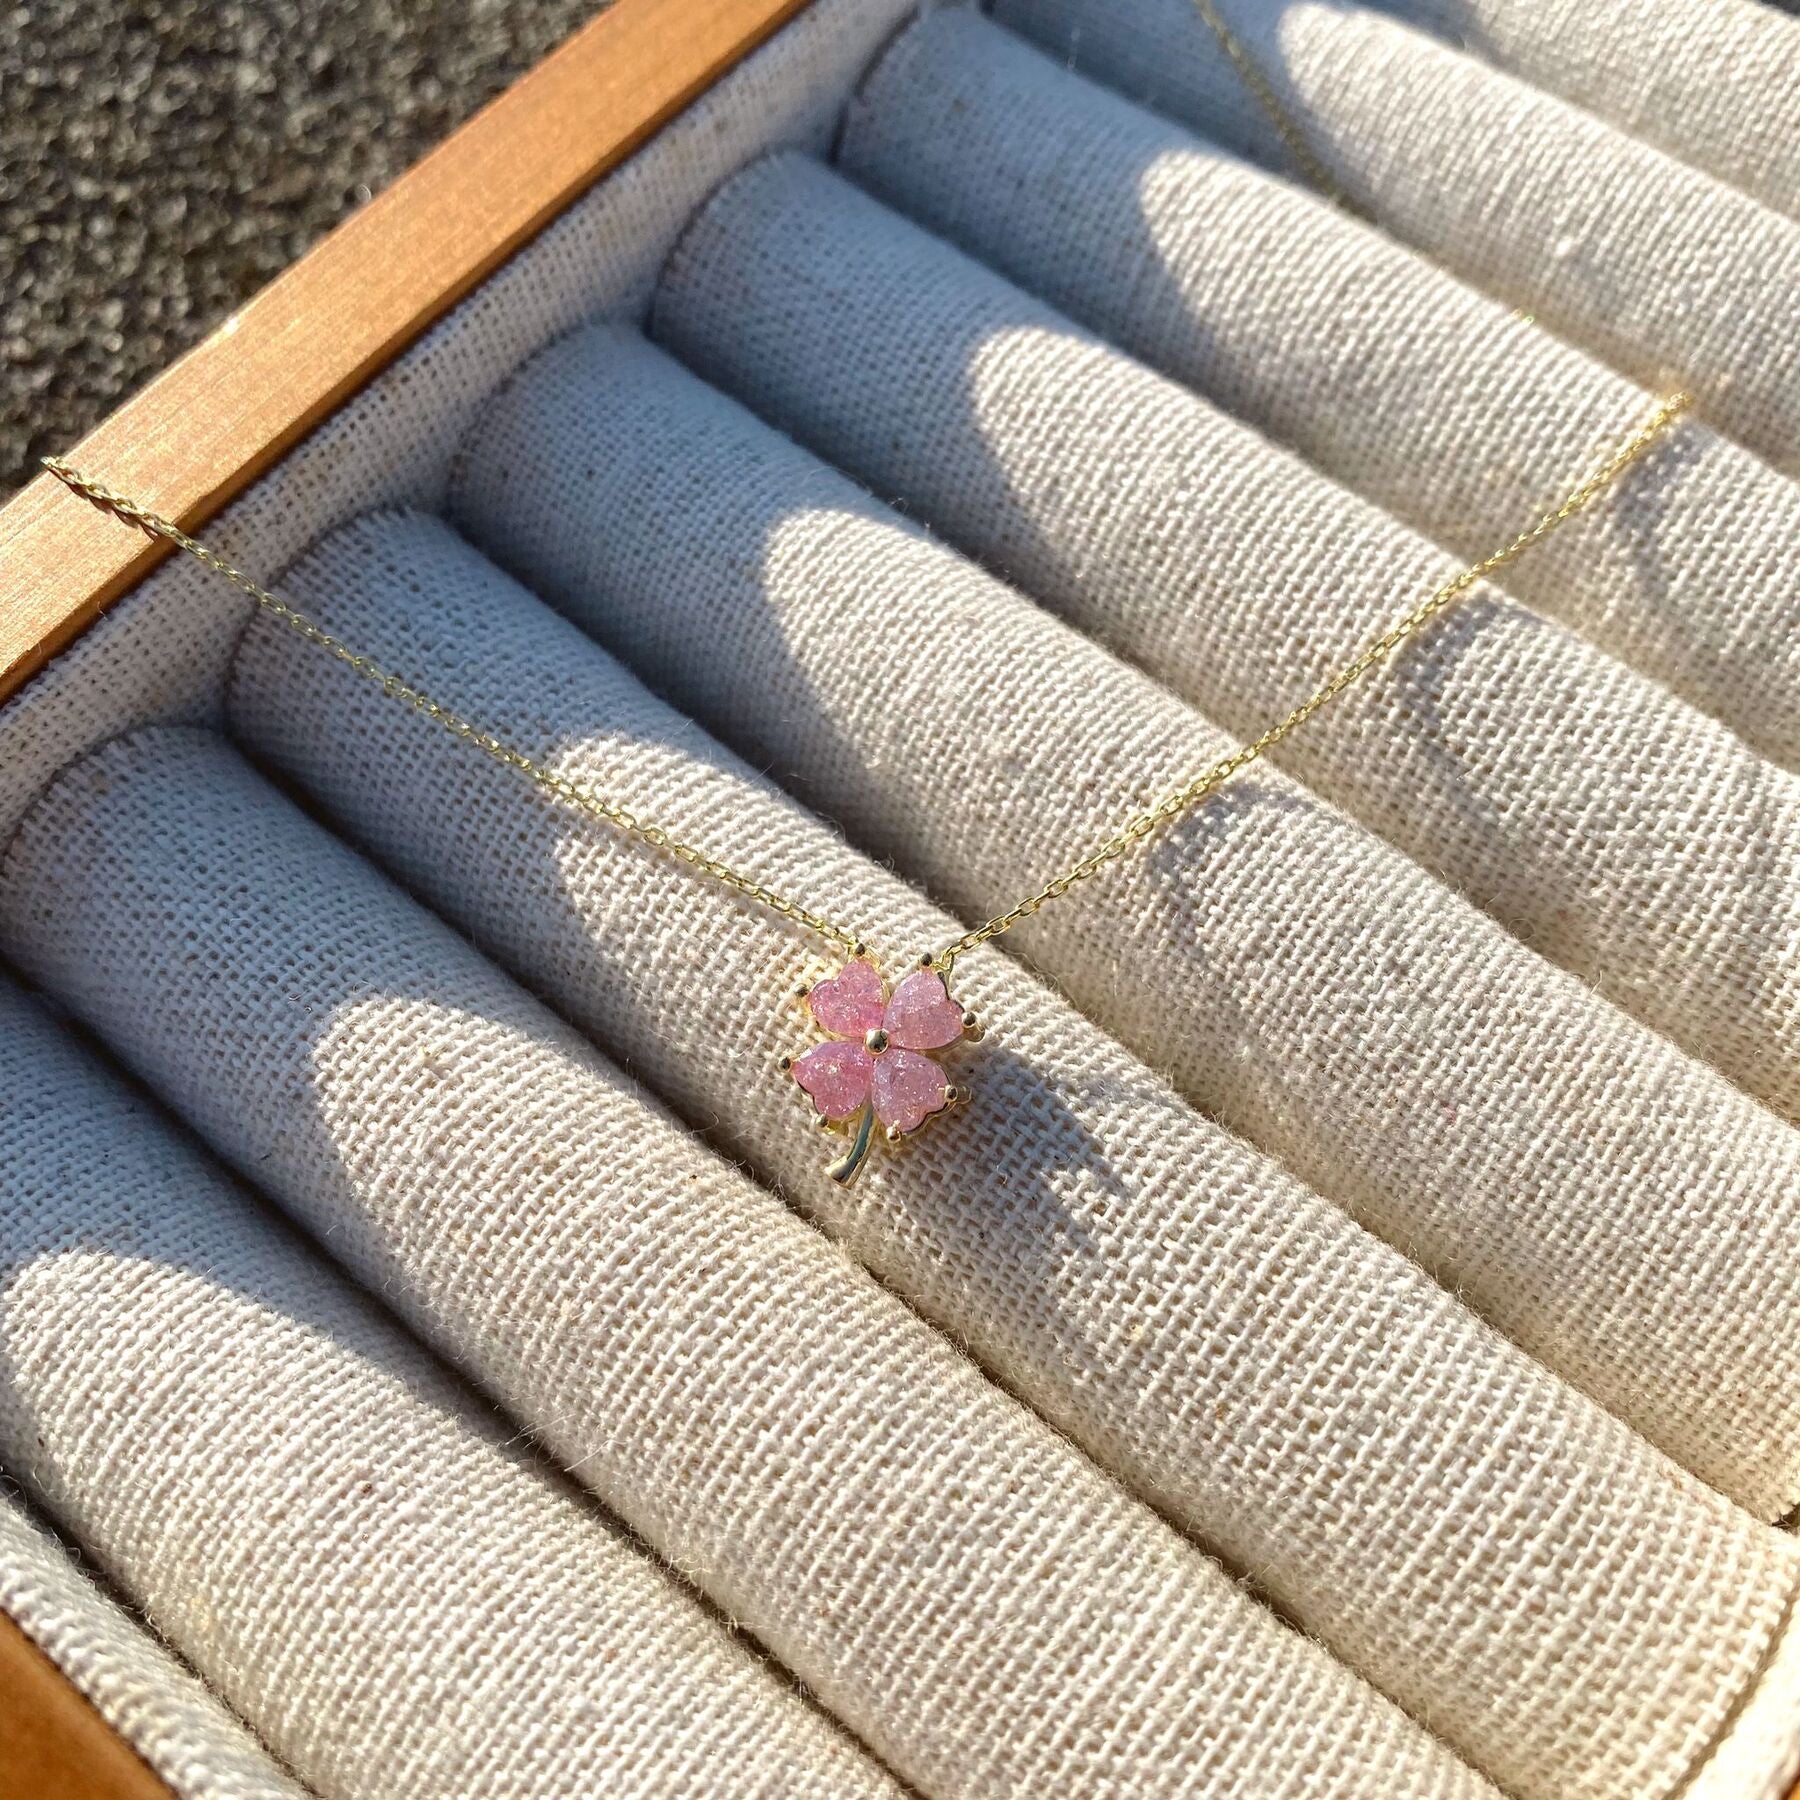 Four Leaf Clover Sterling Silver Necklace - Pink